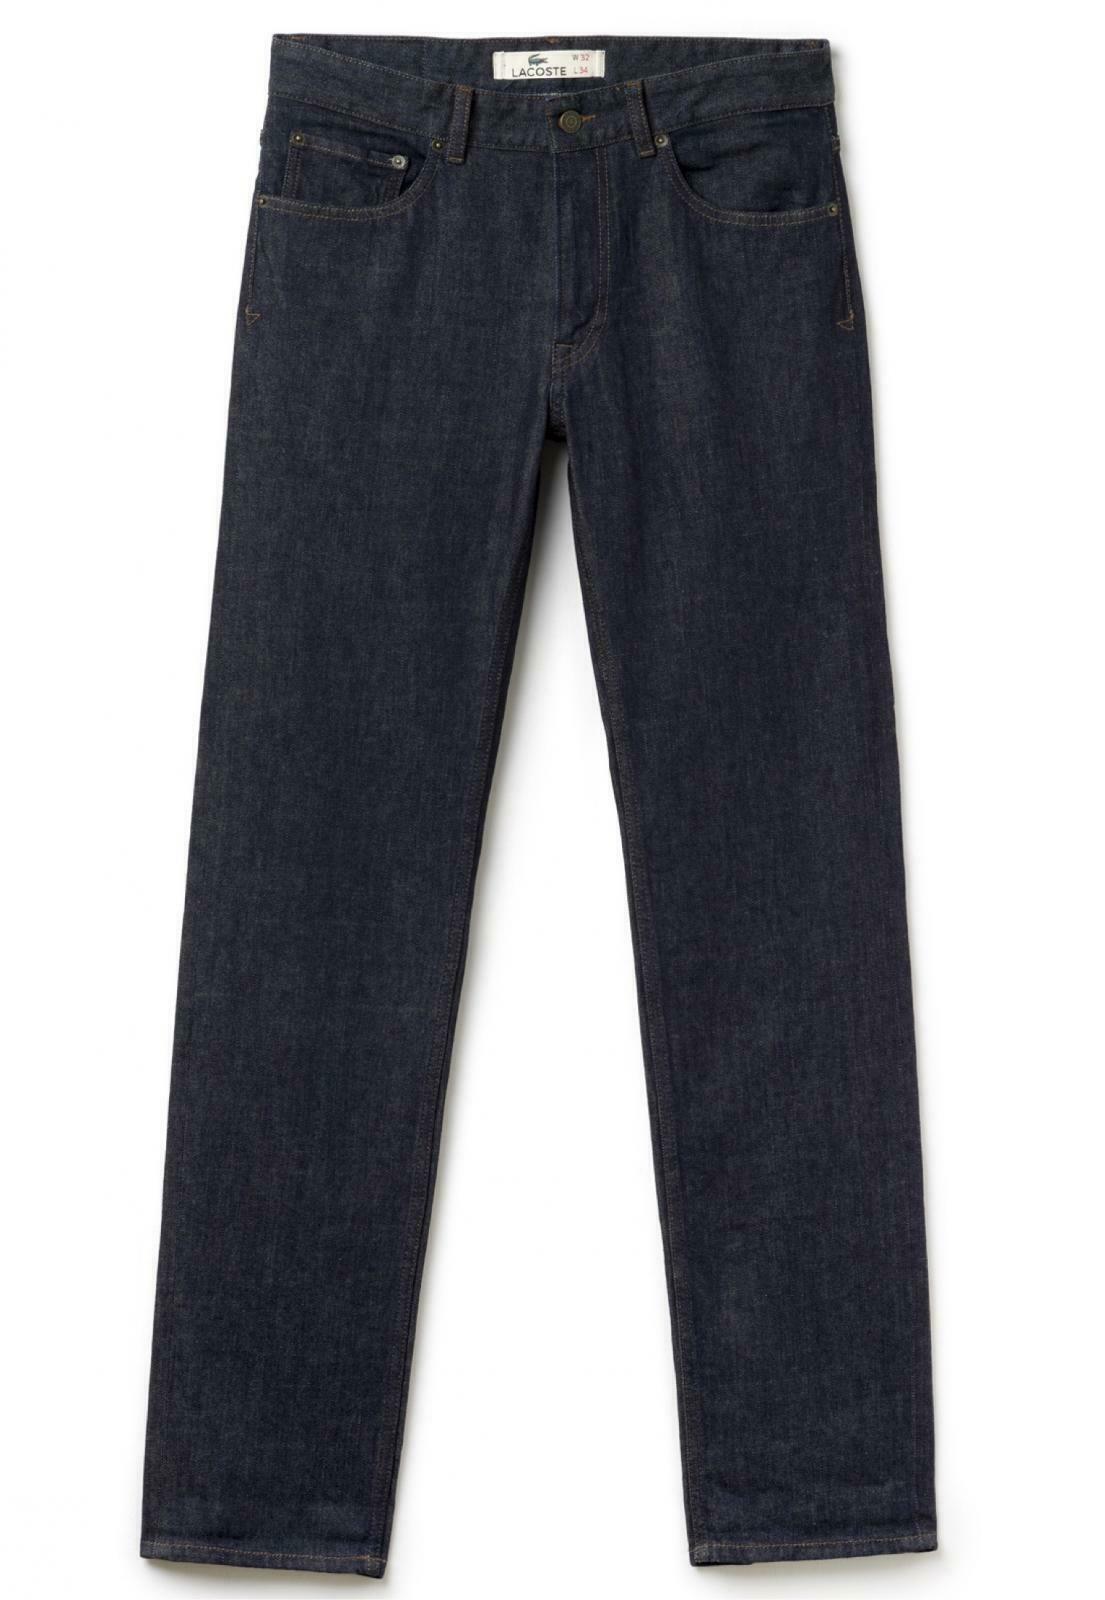 lacoste jeans regular fit